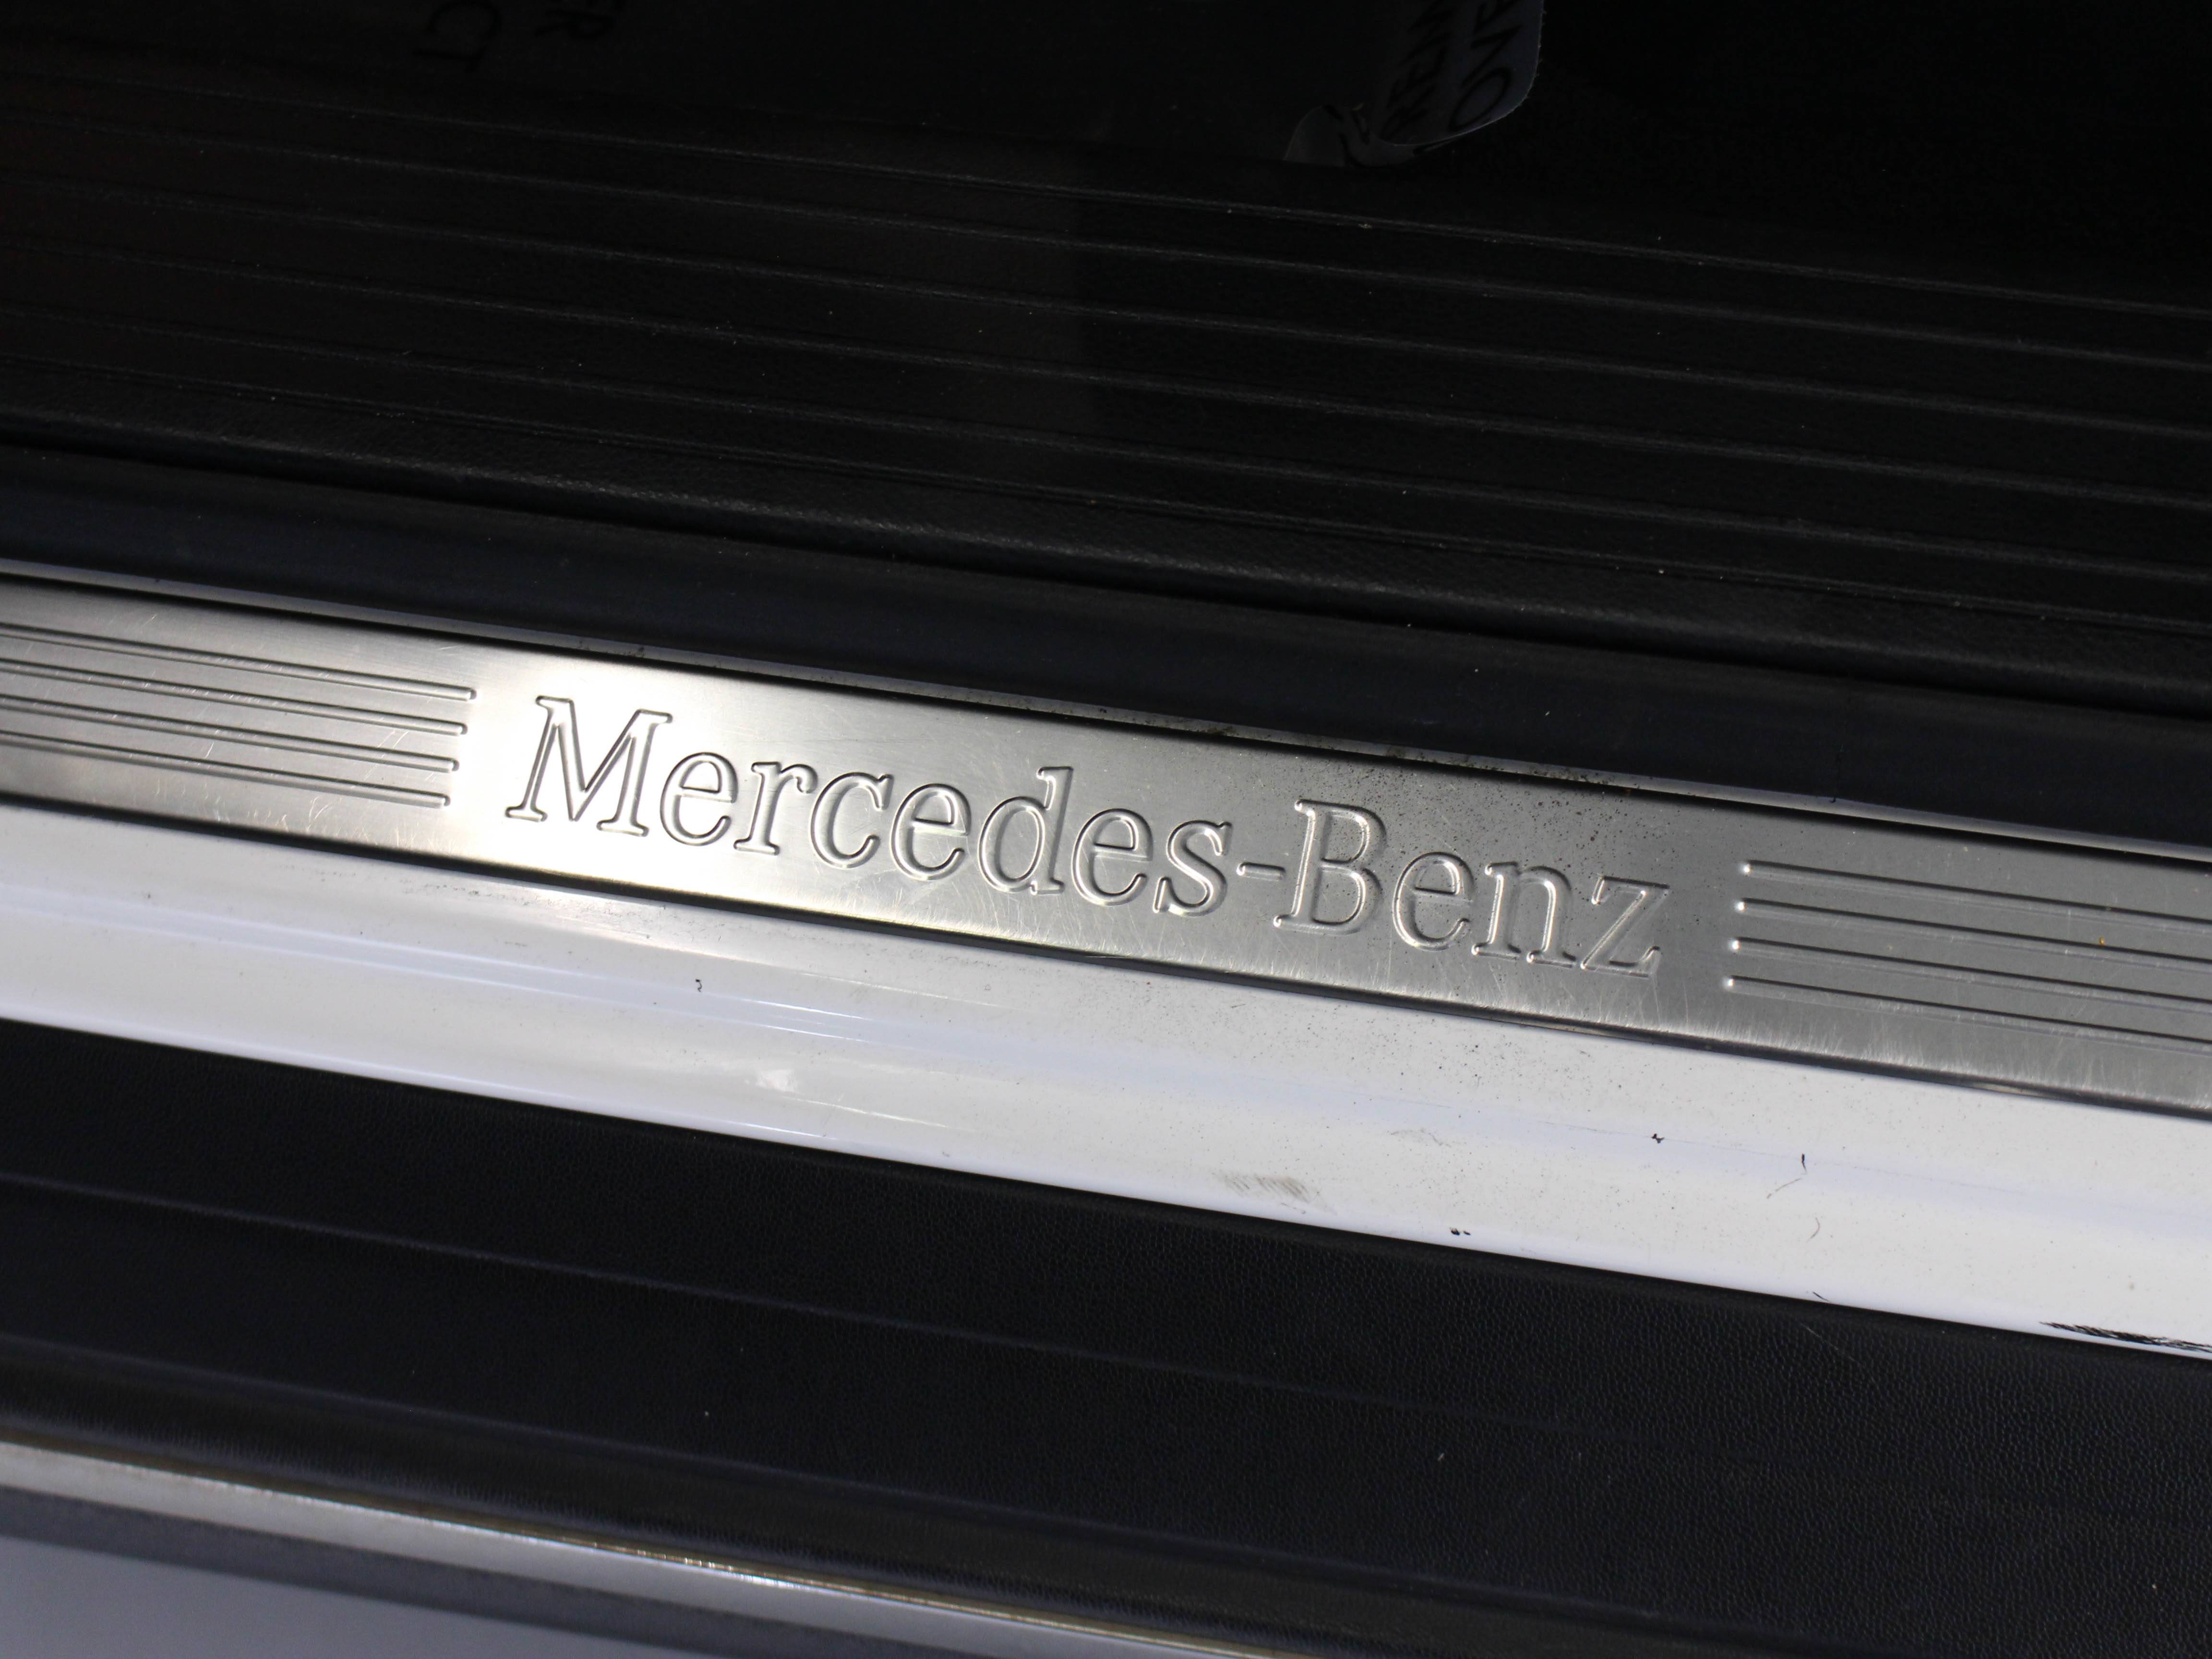 Florida Fine Cars - Used MERCEDES-BENZ GLE CLASS 2016 MARGATE GLE350